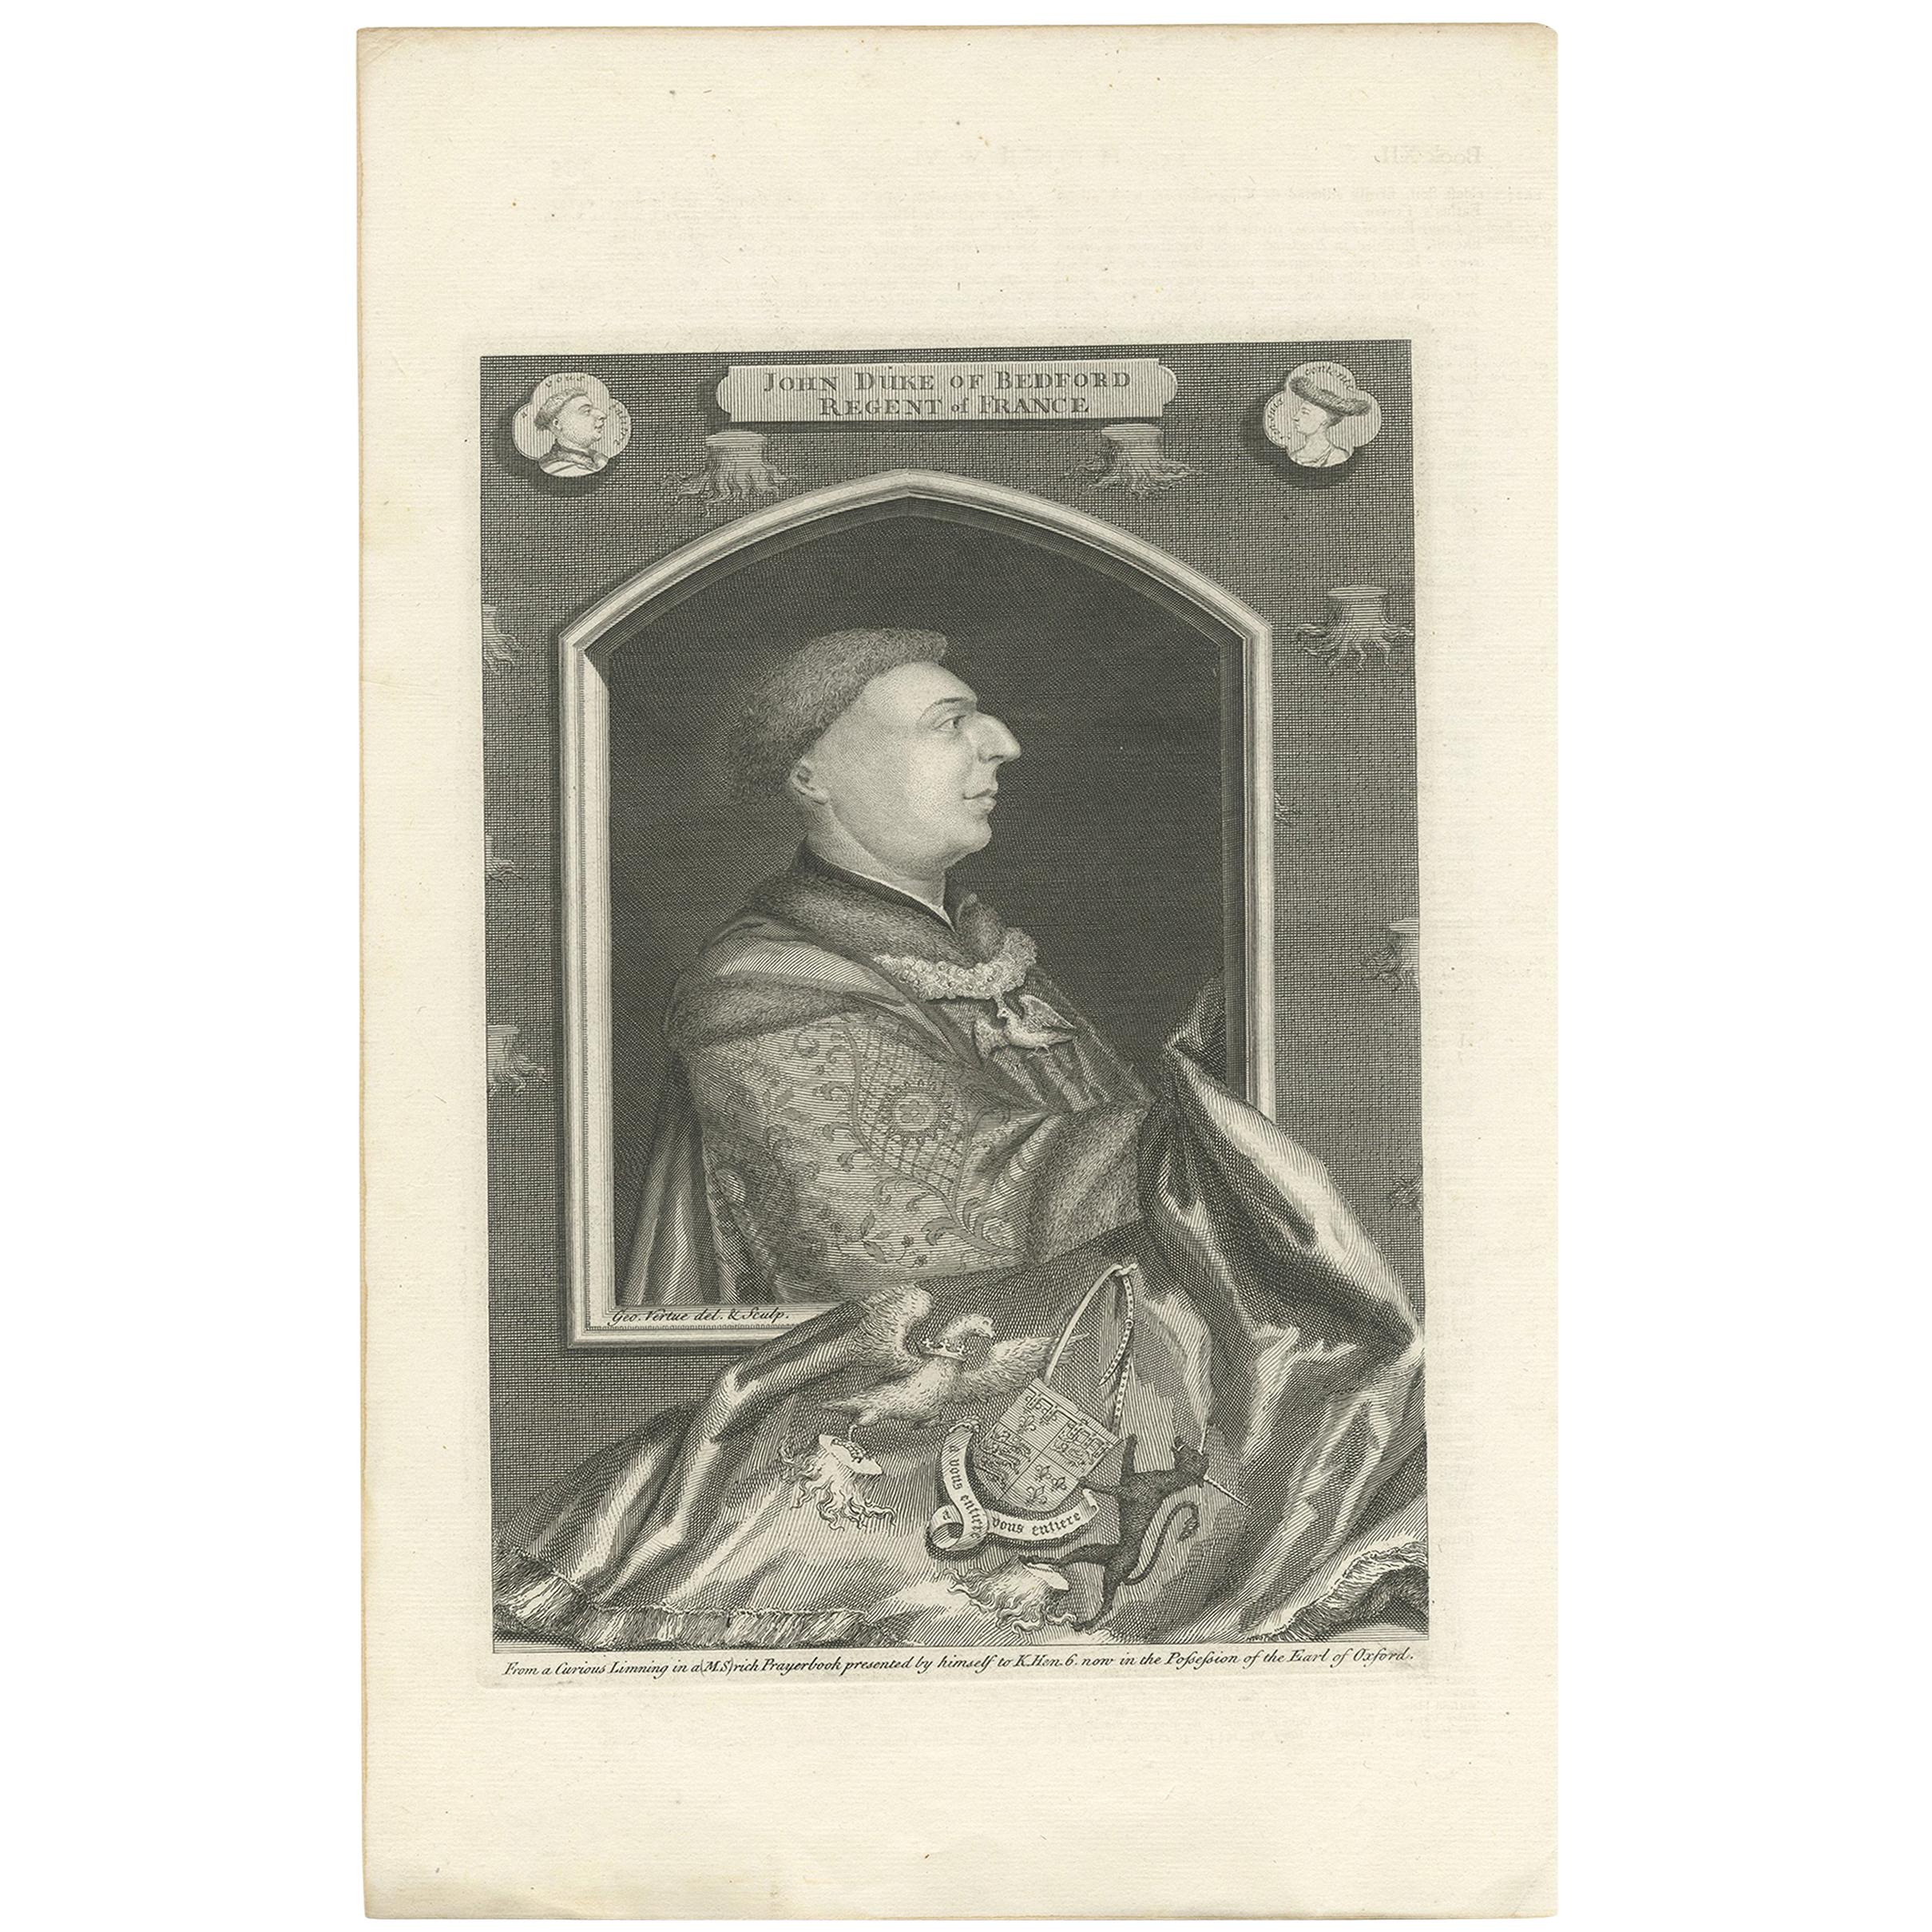 Antique Portrait of John Duke of Bedford by Vertue, circa 1750